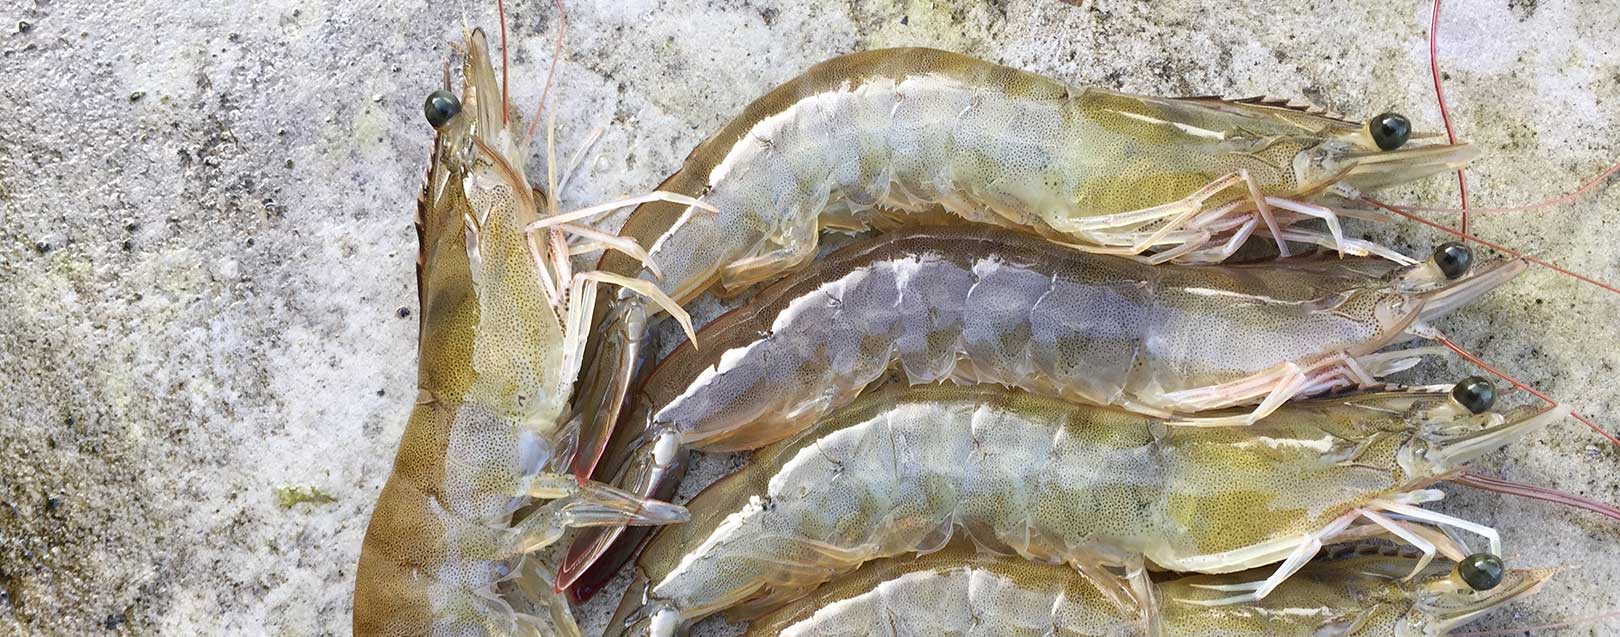 Vannamei shrimp helping India’s marine product exports: MPEDA